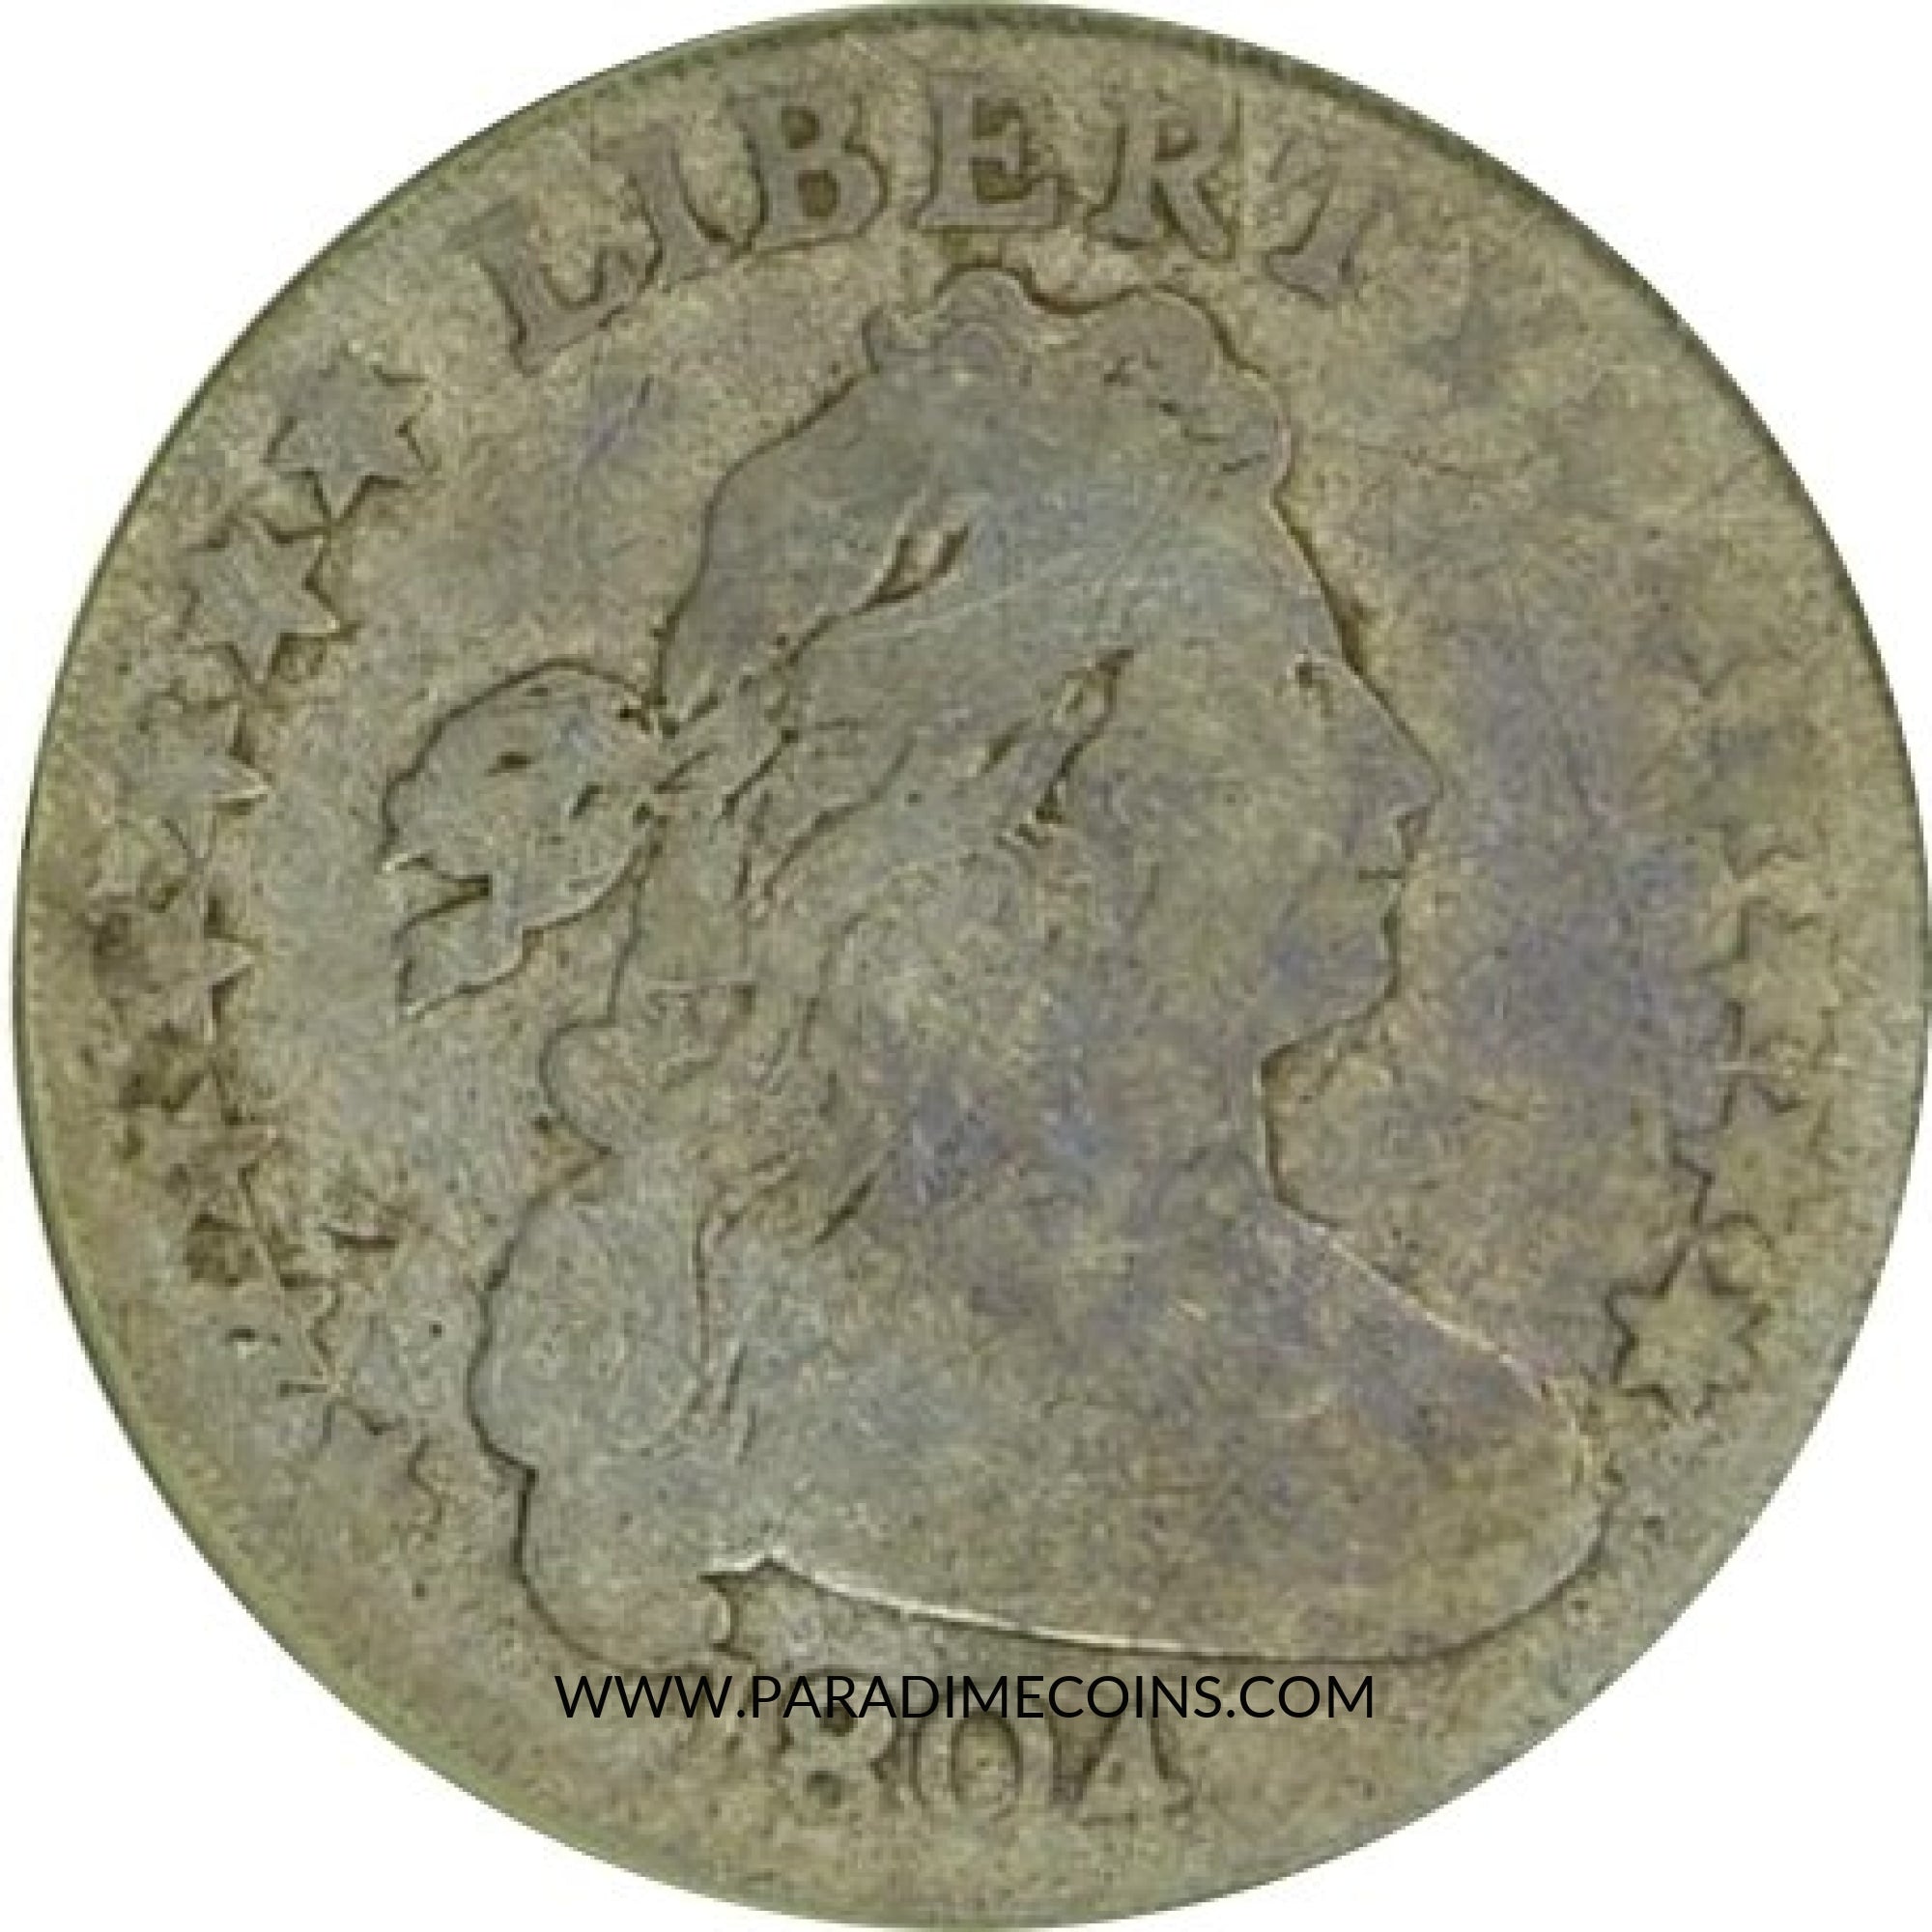 1804 10C G04 PCGS OGH - Paradime Coins | PCGS NGC CACG CAC Rare US Numismatic Coins For Sale